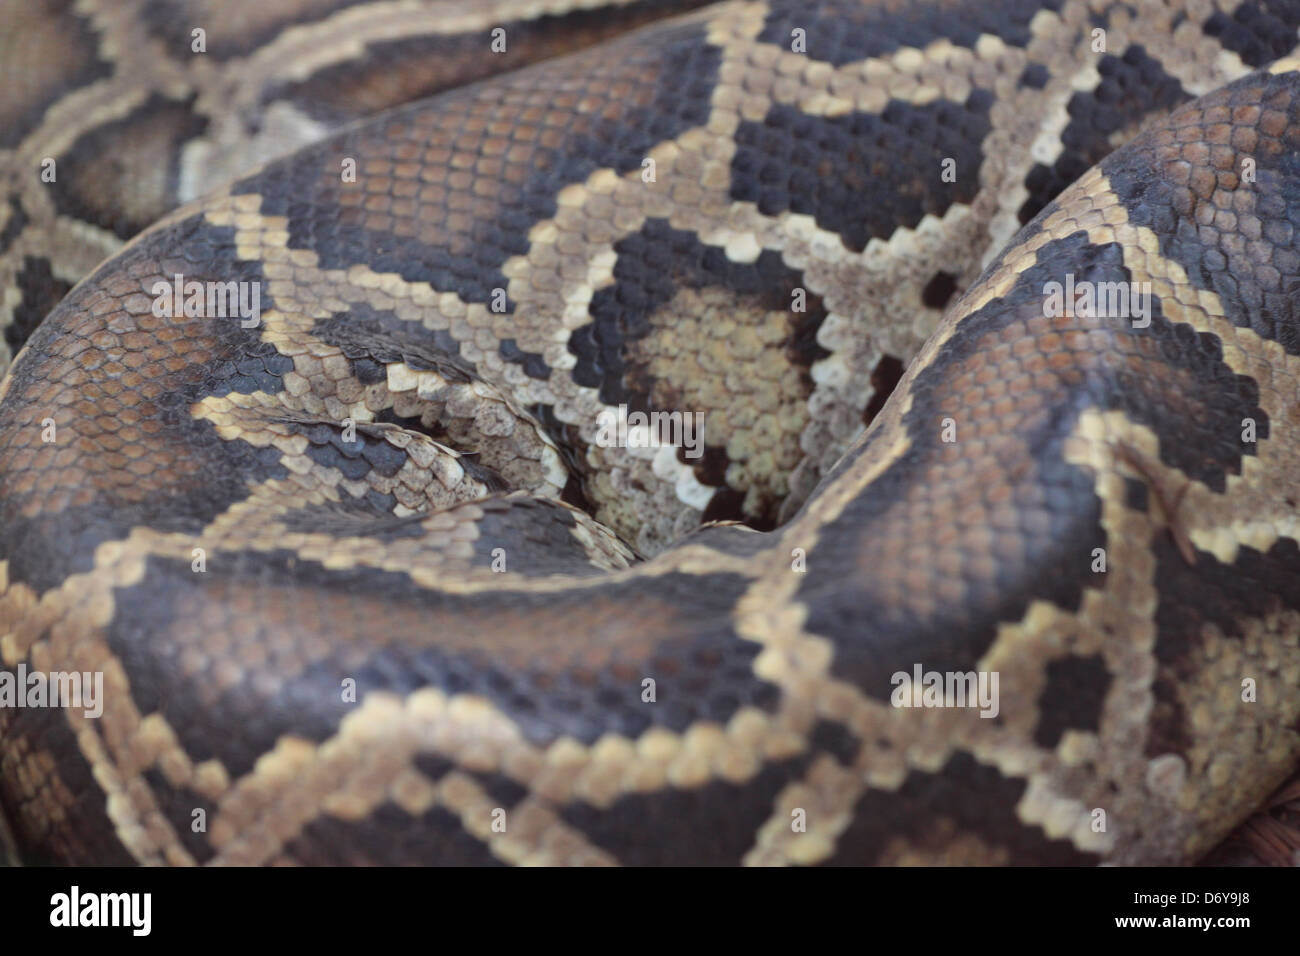 The Boa of Thailand,It a skin snake. Stock Photo